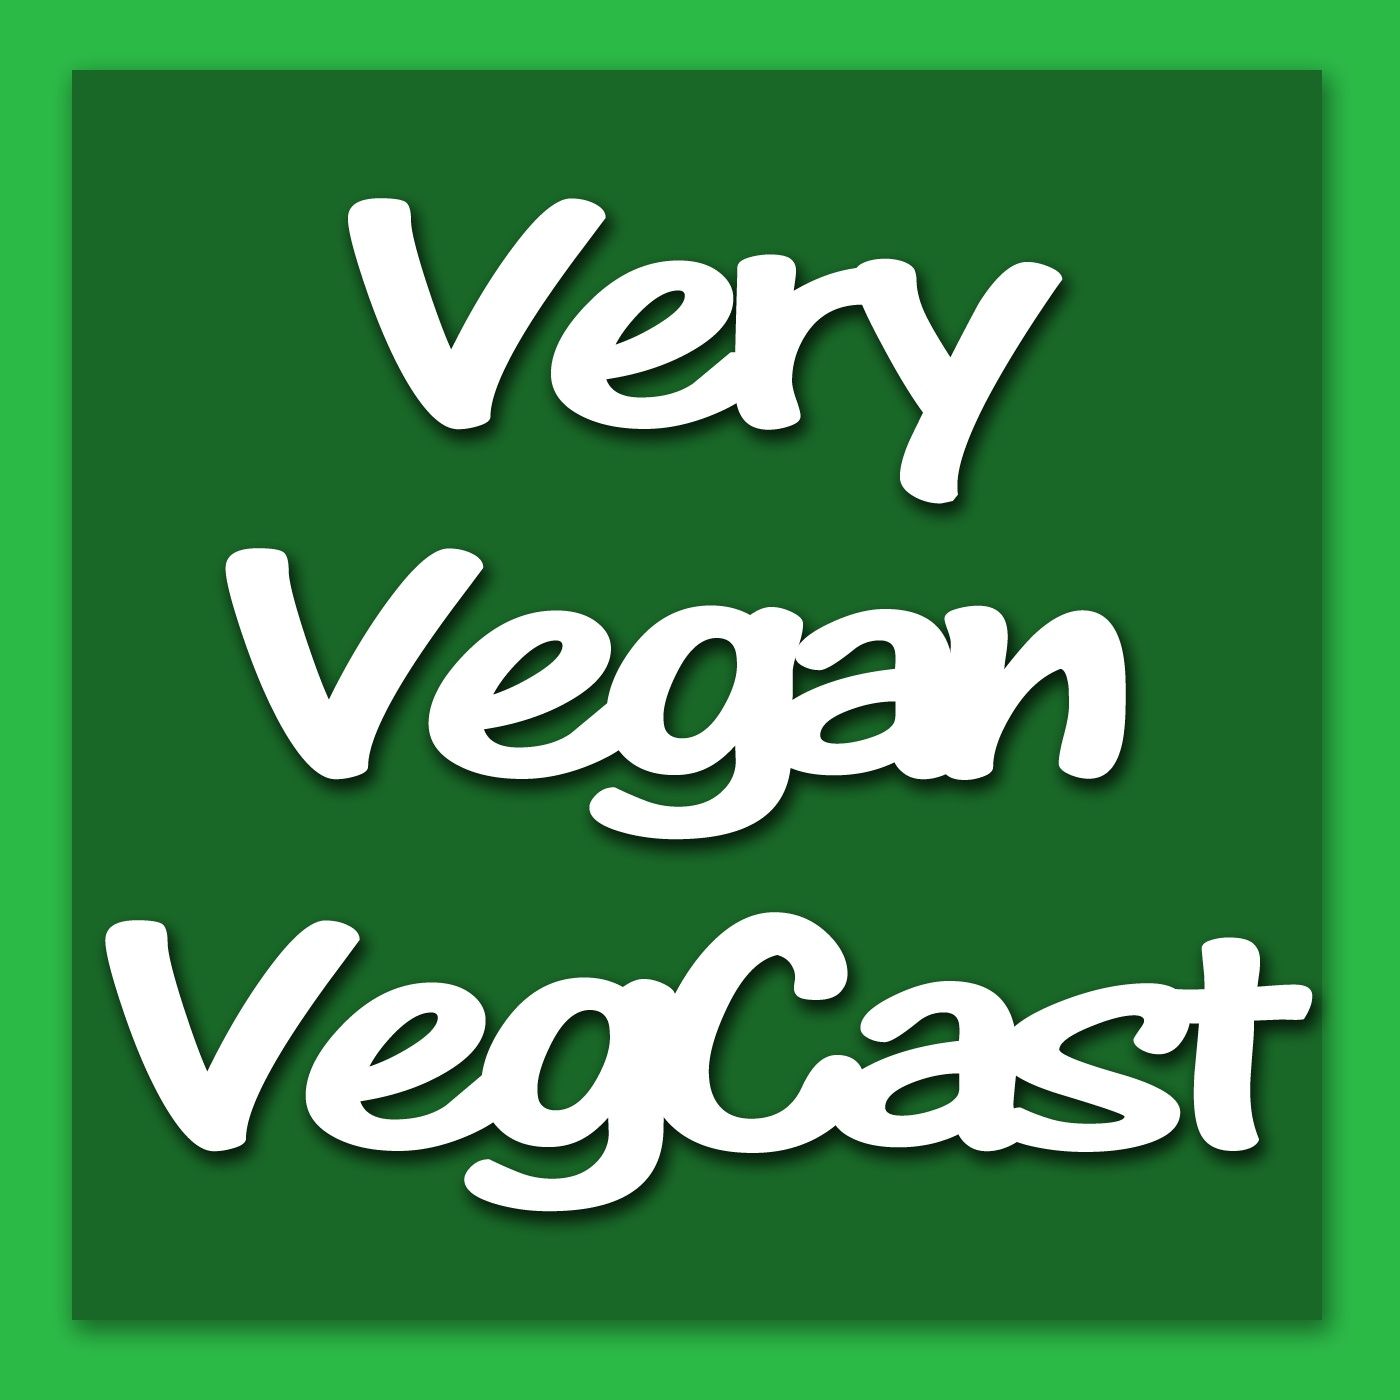 Very Vegan Vegcast